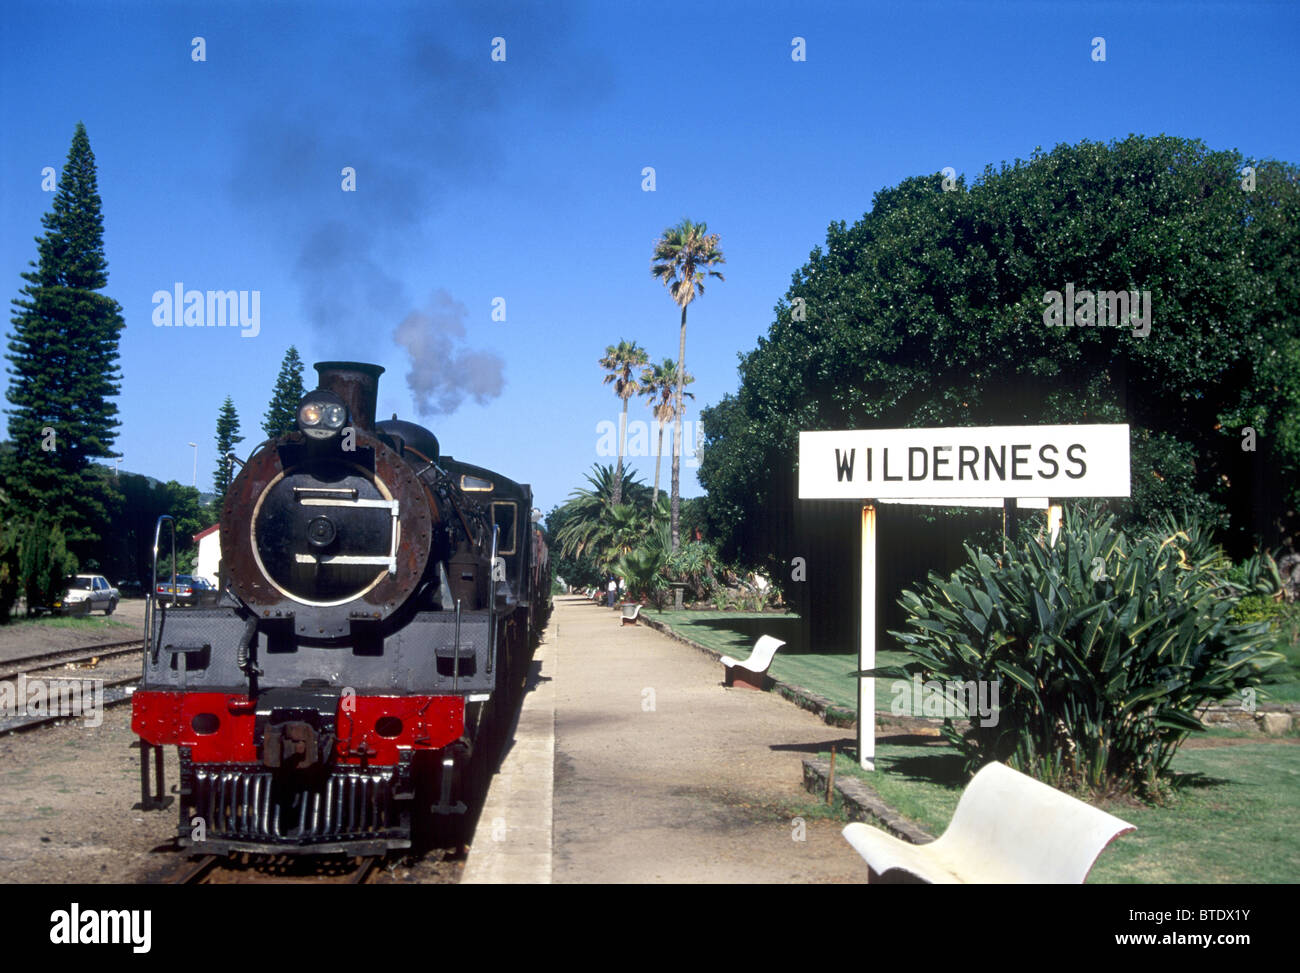 The well known Choo-Choo steam train in Wilderness Stock Photo